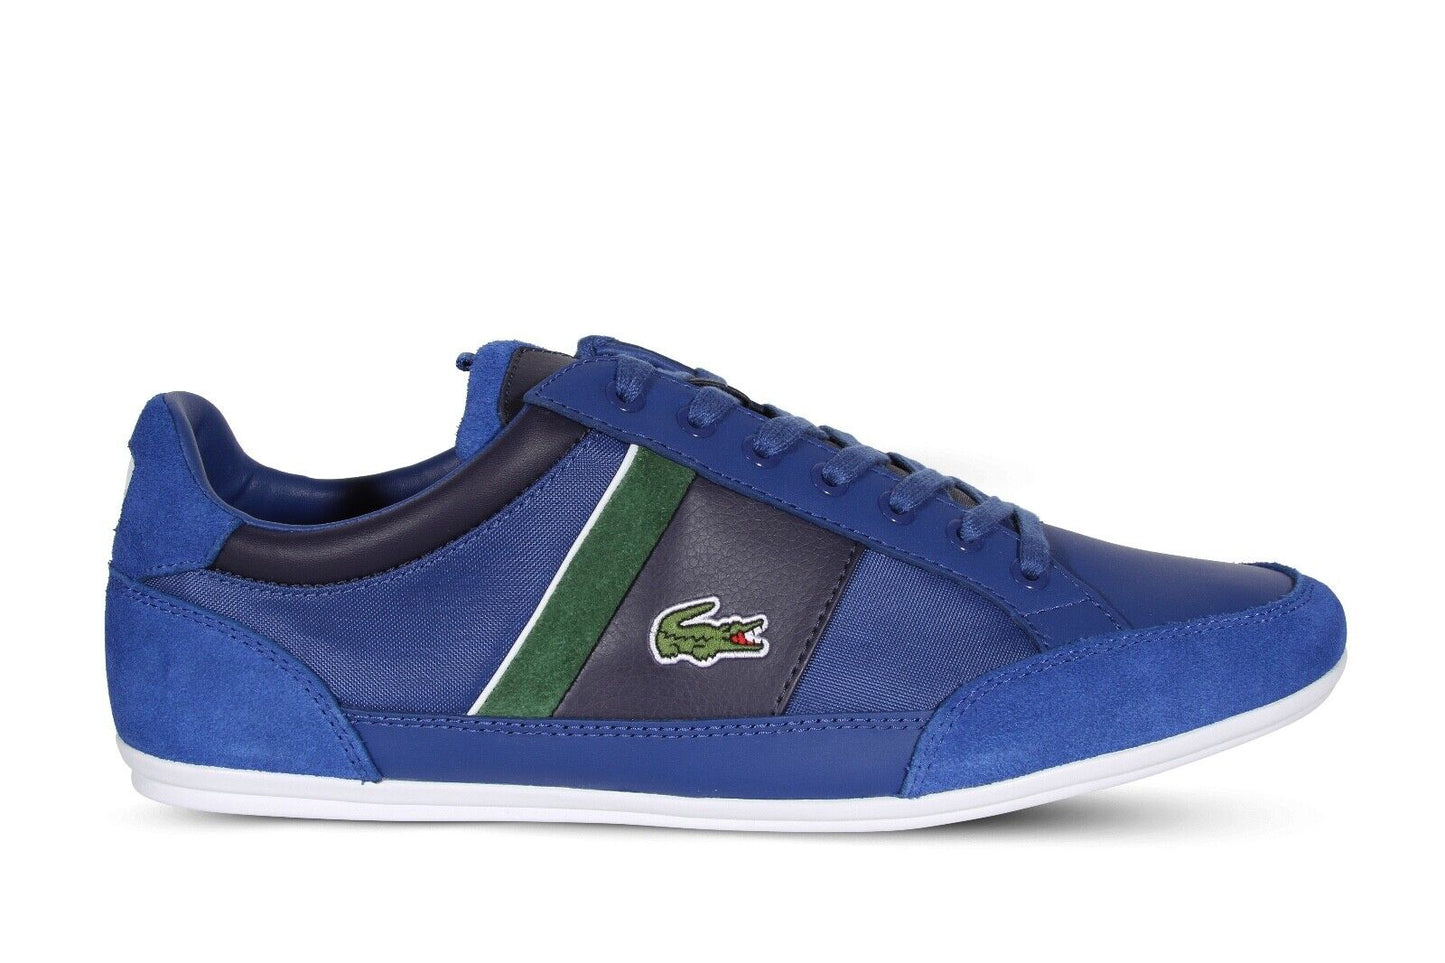 Lacoste Chaymon 123 1 CMA Men’s Sneakers in Dark Blue and Navy 745CMA0017BN2